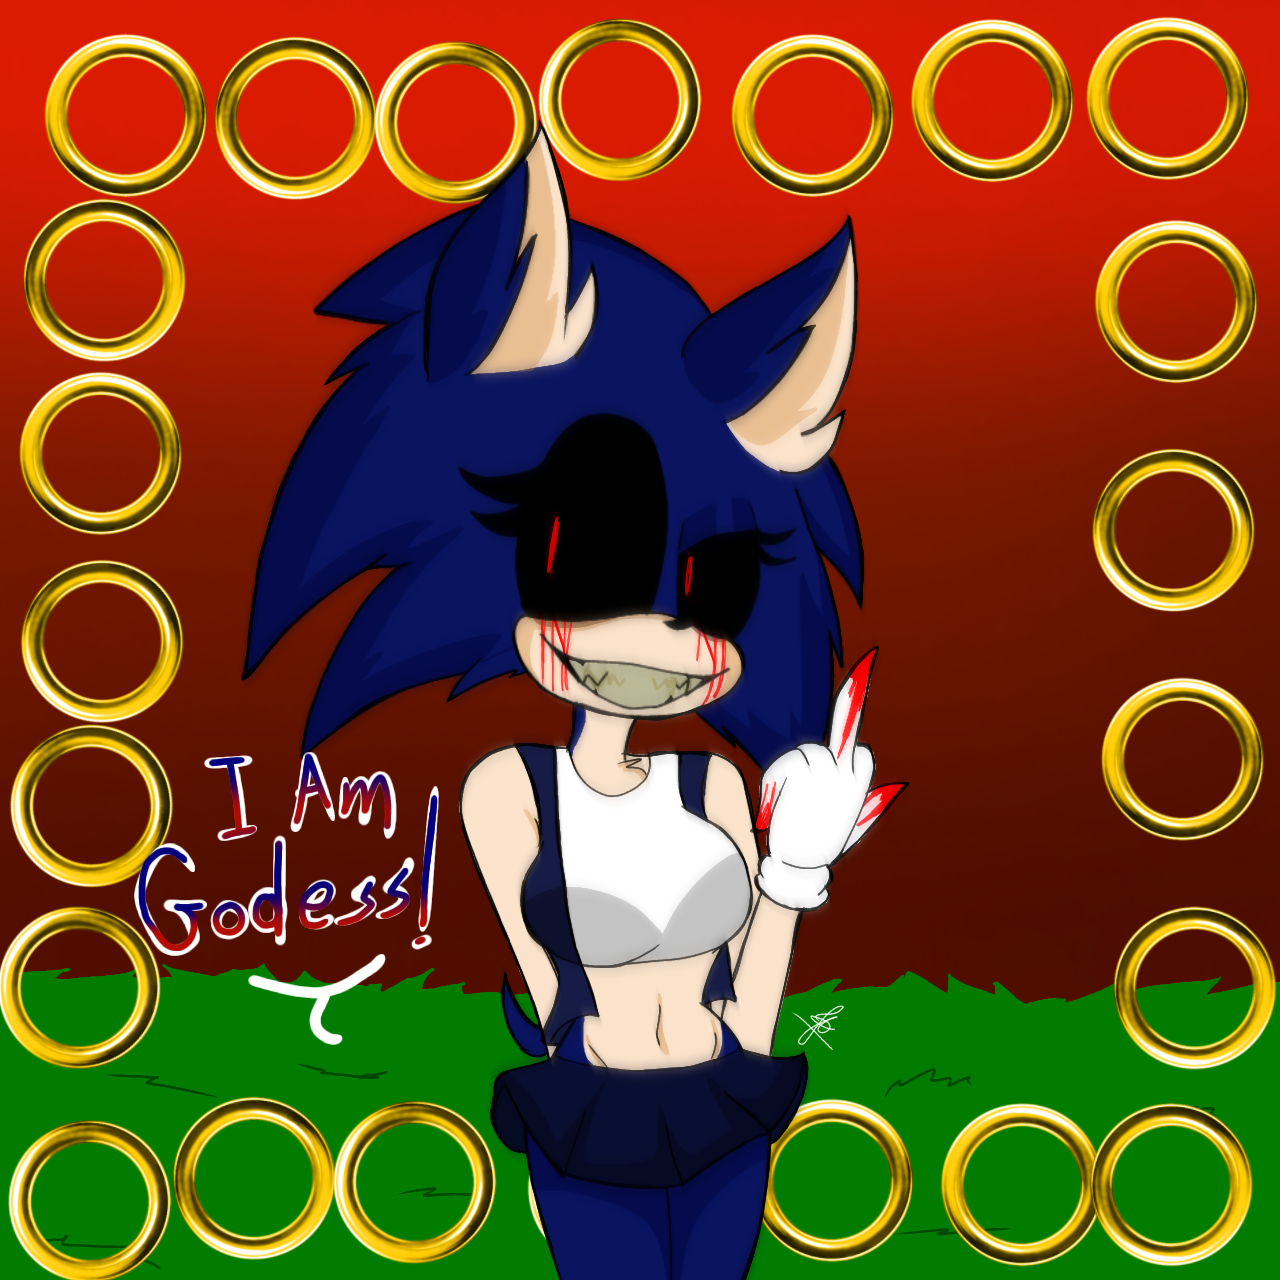 Female/genderbend Sonic.Exe and Majin Sonic by gabr08briel on DeviantArt